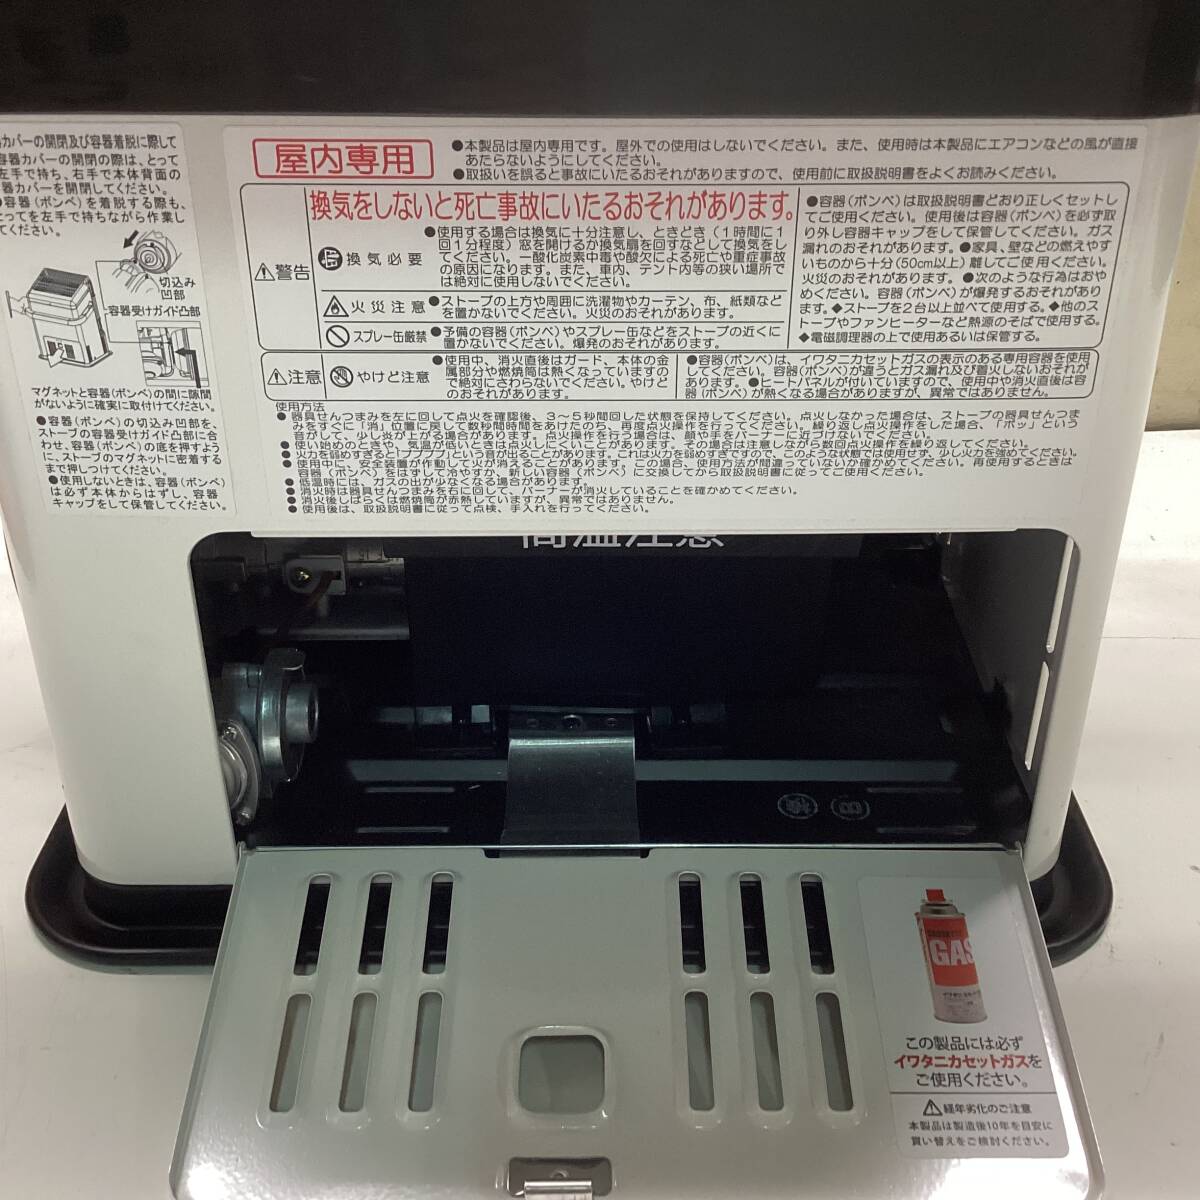 Iwatani Iwatani кассета газовая печка газовая печка нагревательный прибор CB-STV-HPR2 текущее состояние 